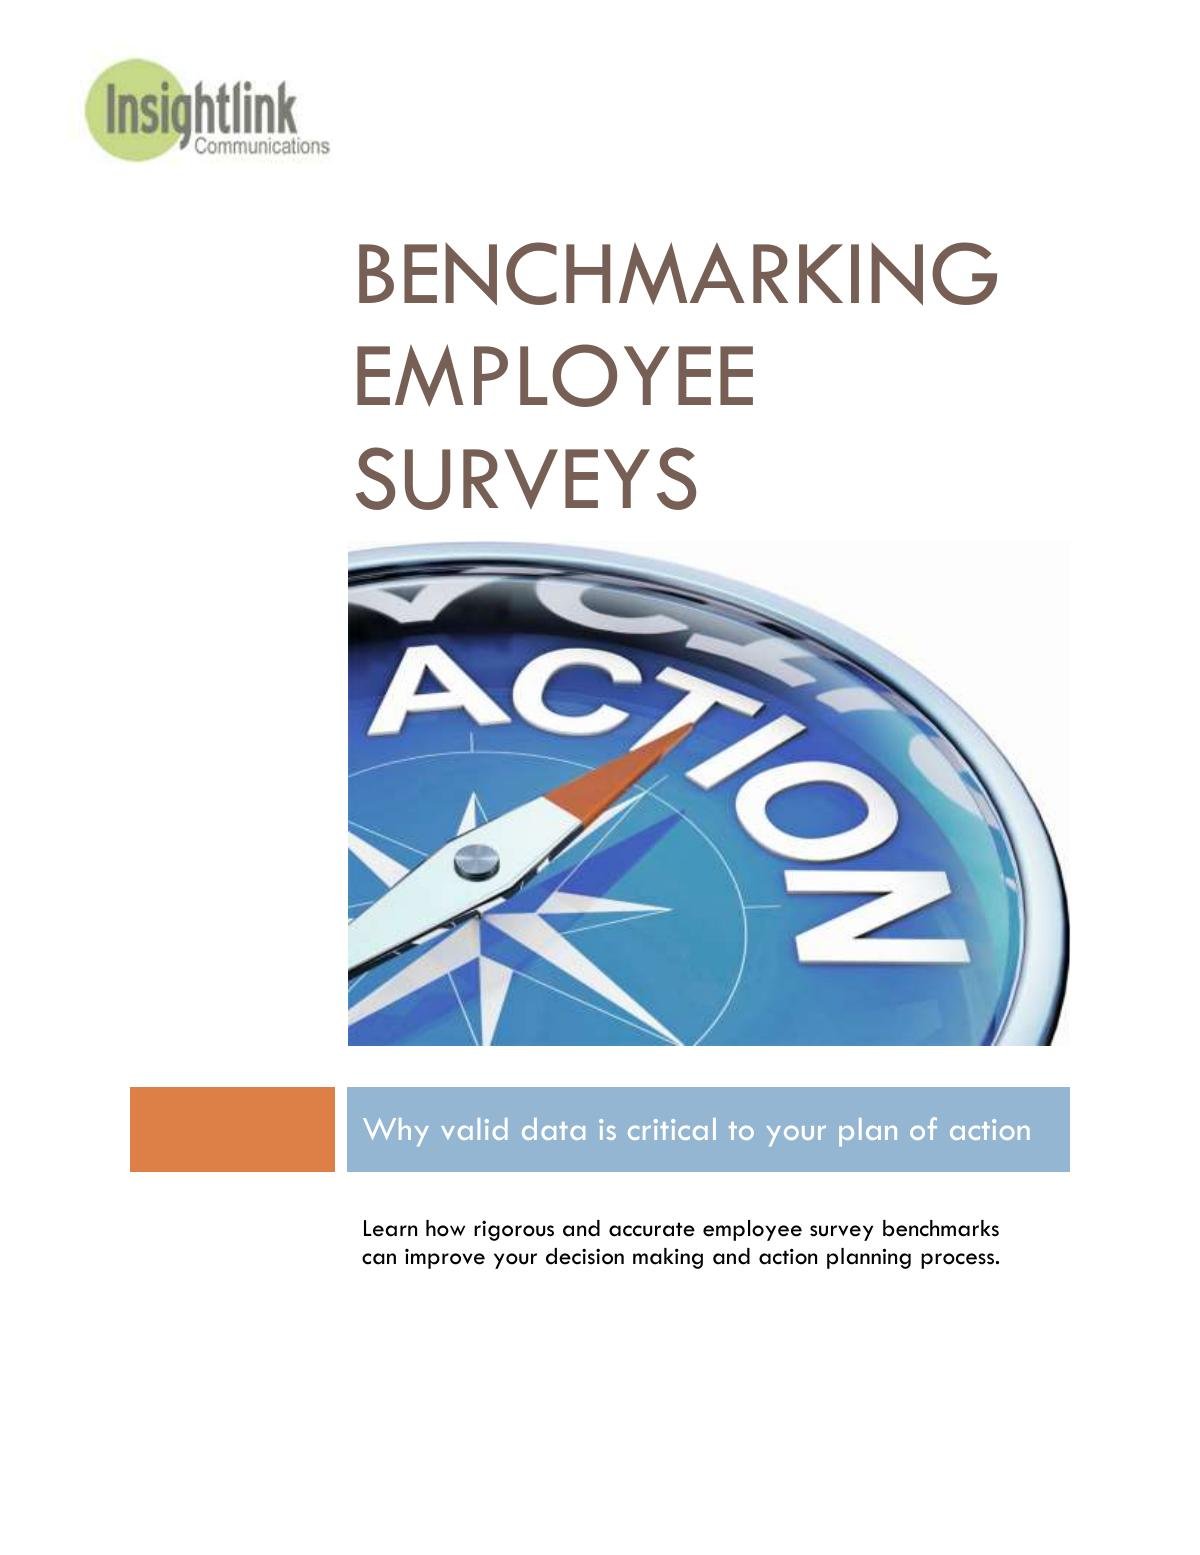 Benchmarking Employee Surveys